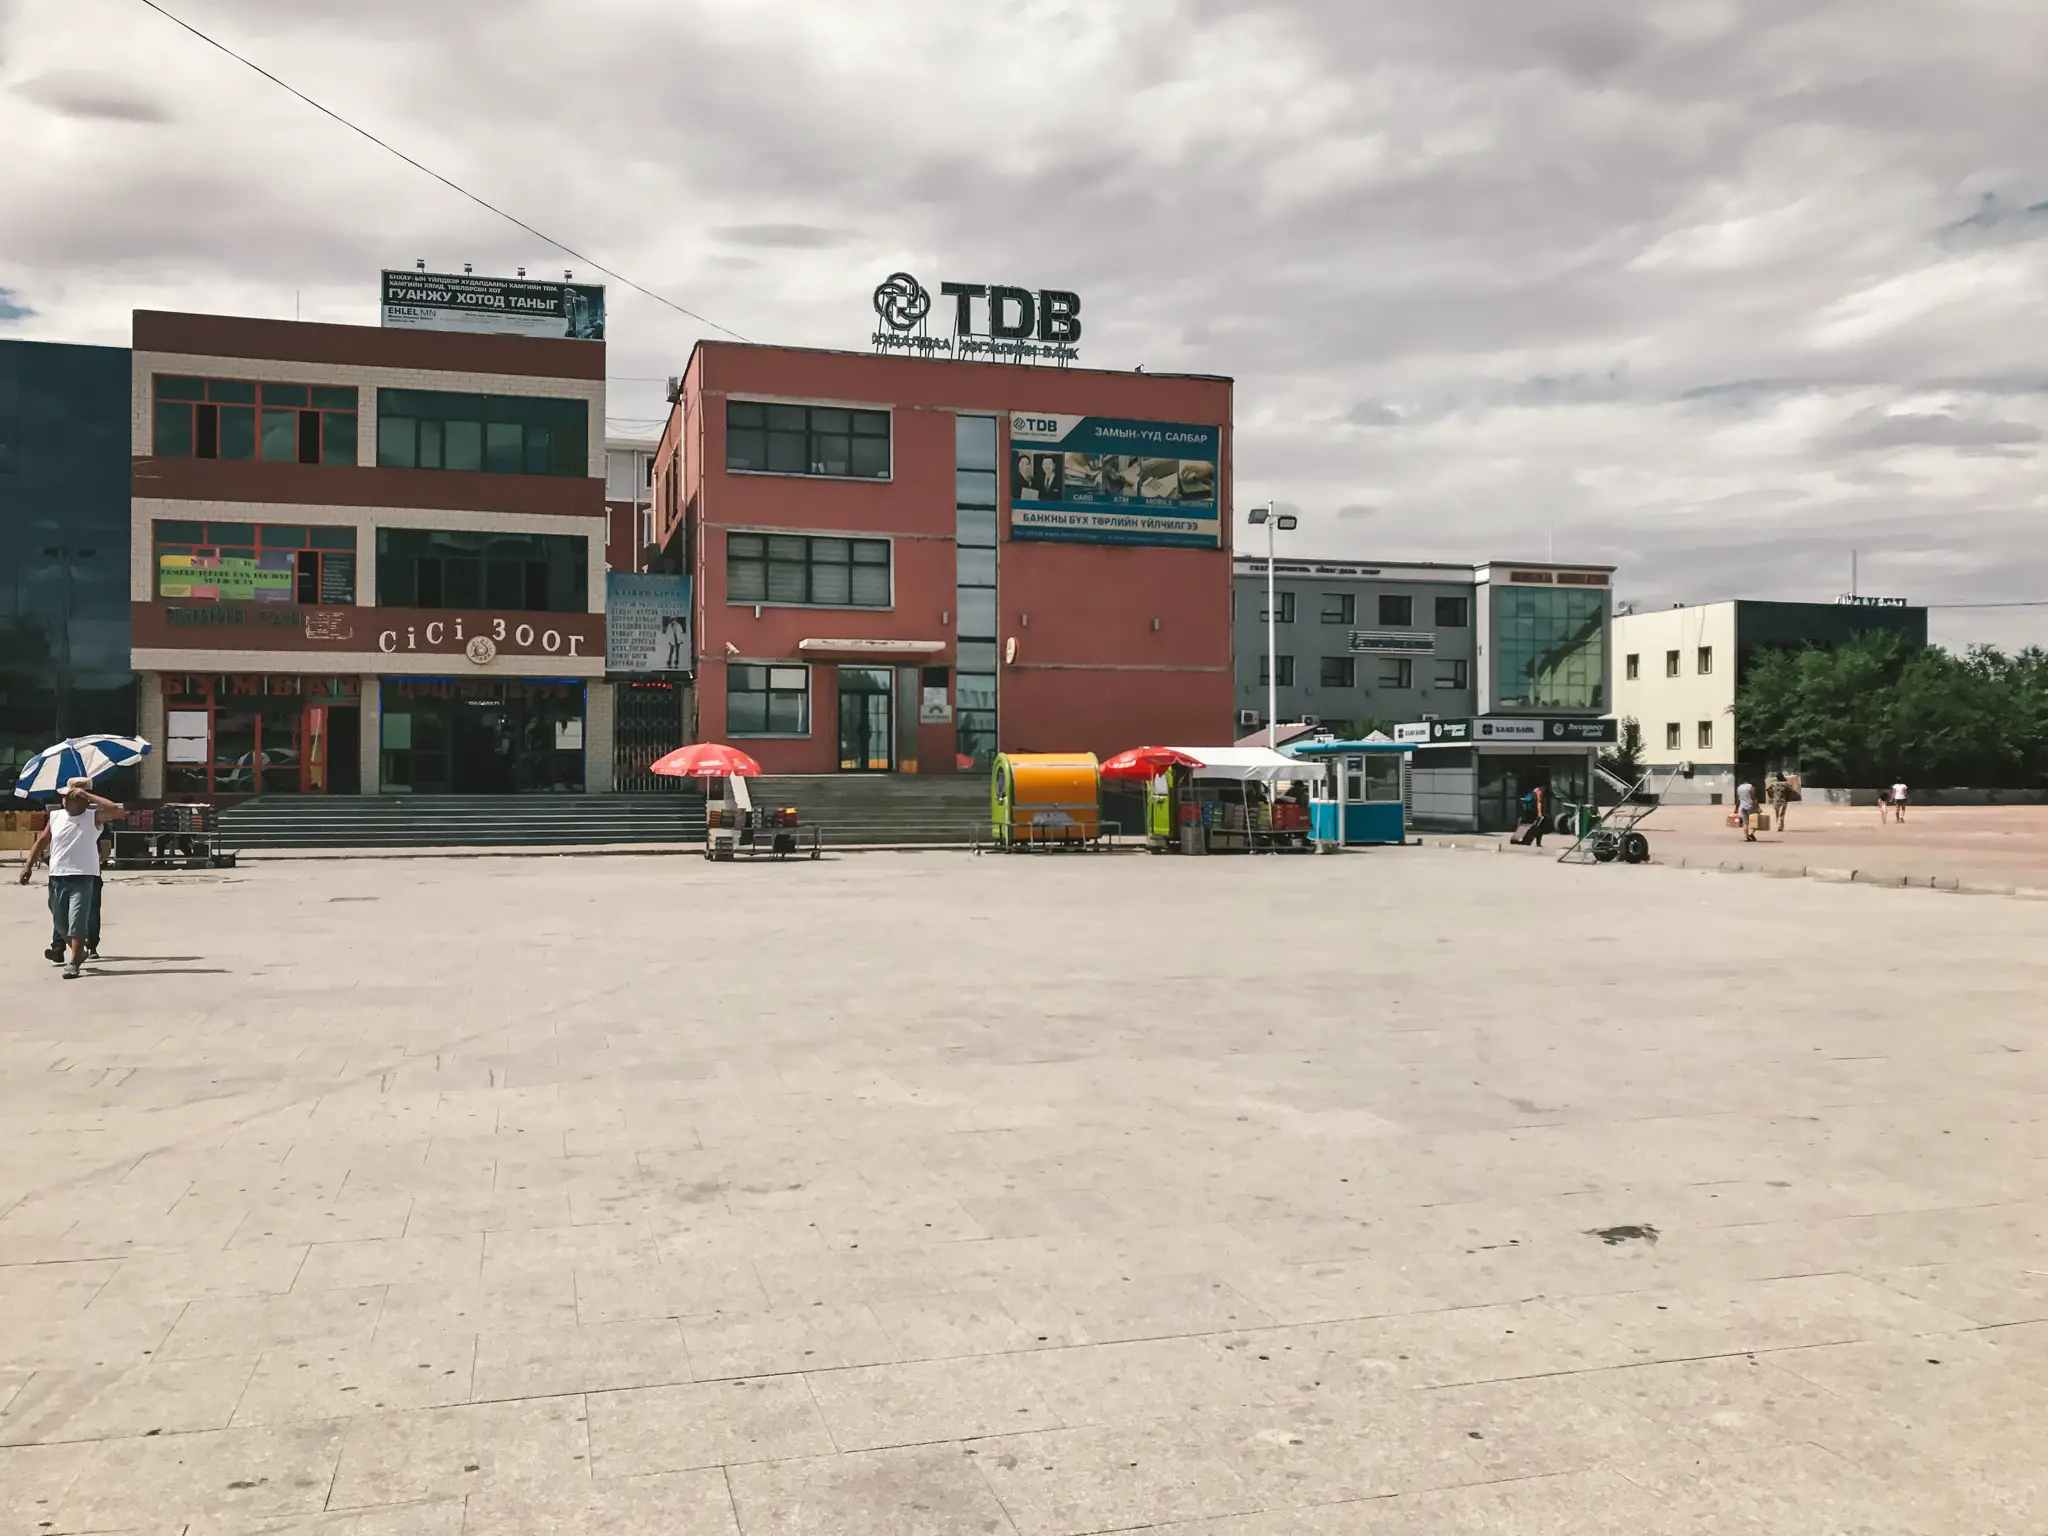 Main square in Zamyn-Uud